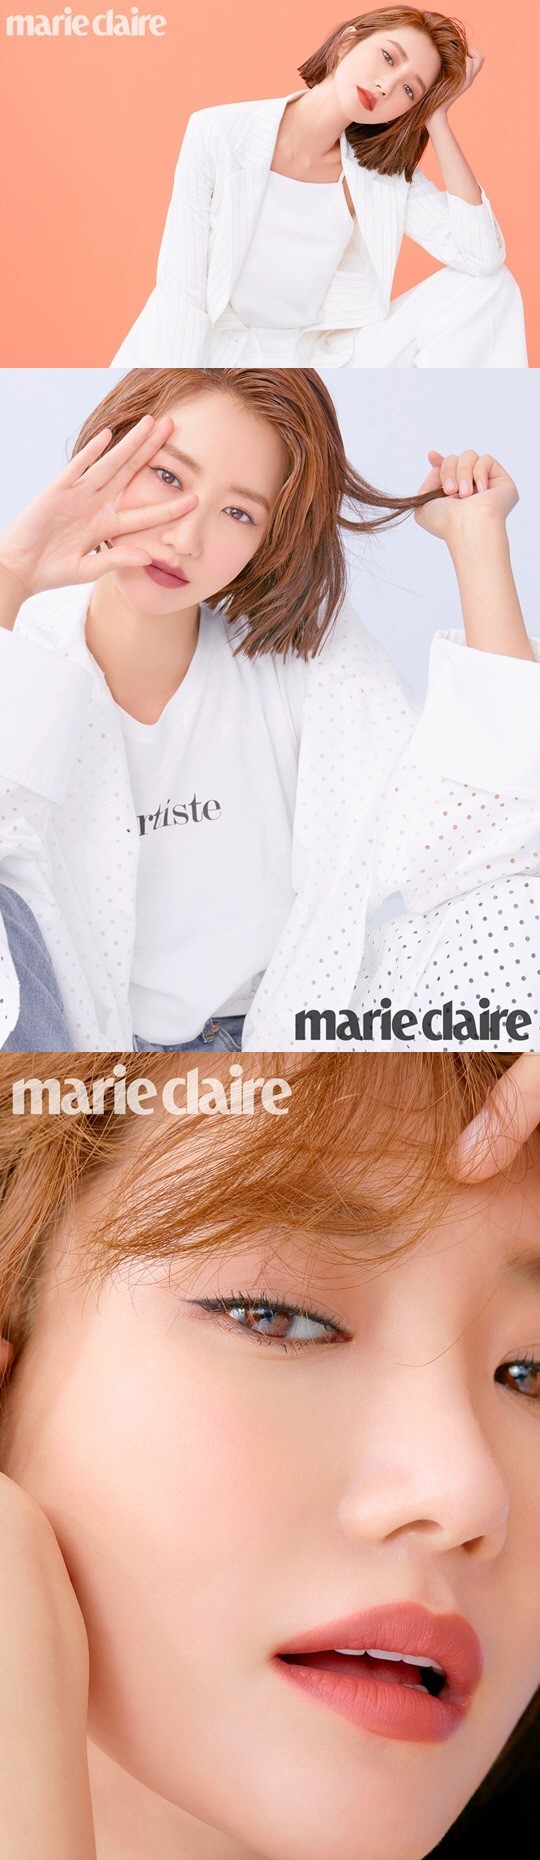 Го Джун Хи в фотосессии журнала "Marie Claire"